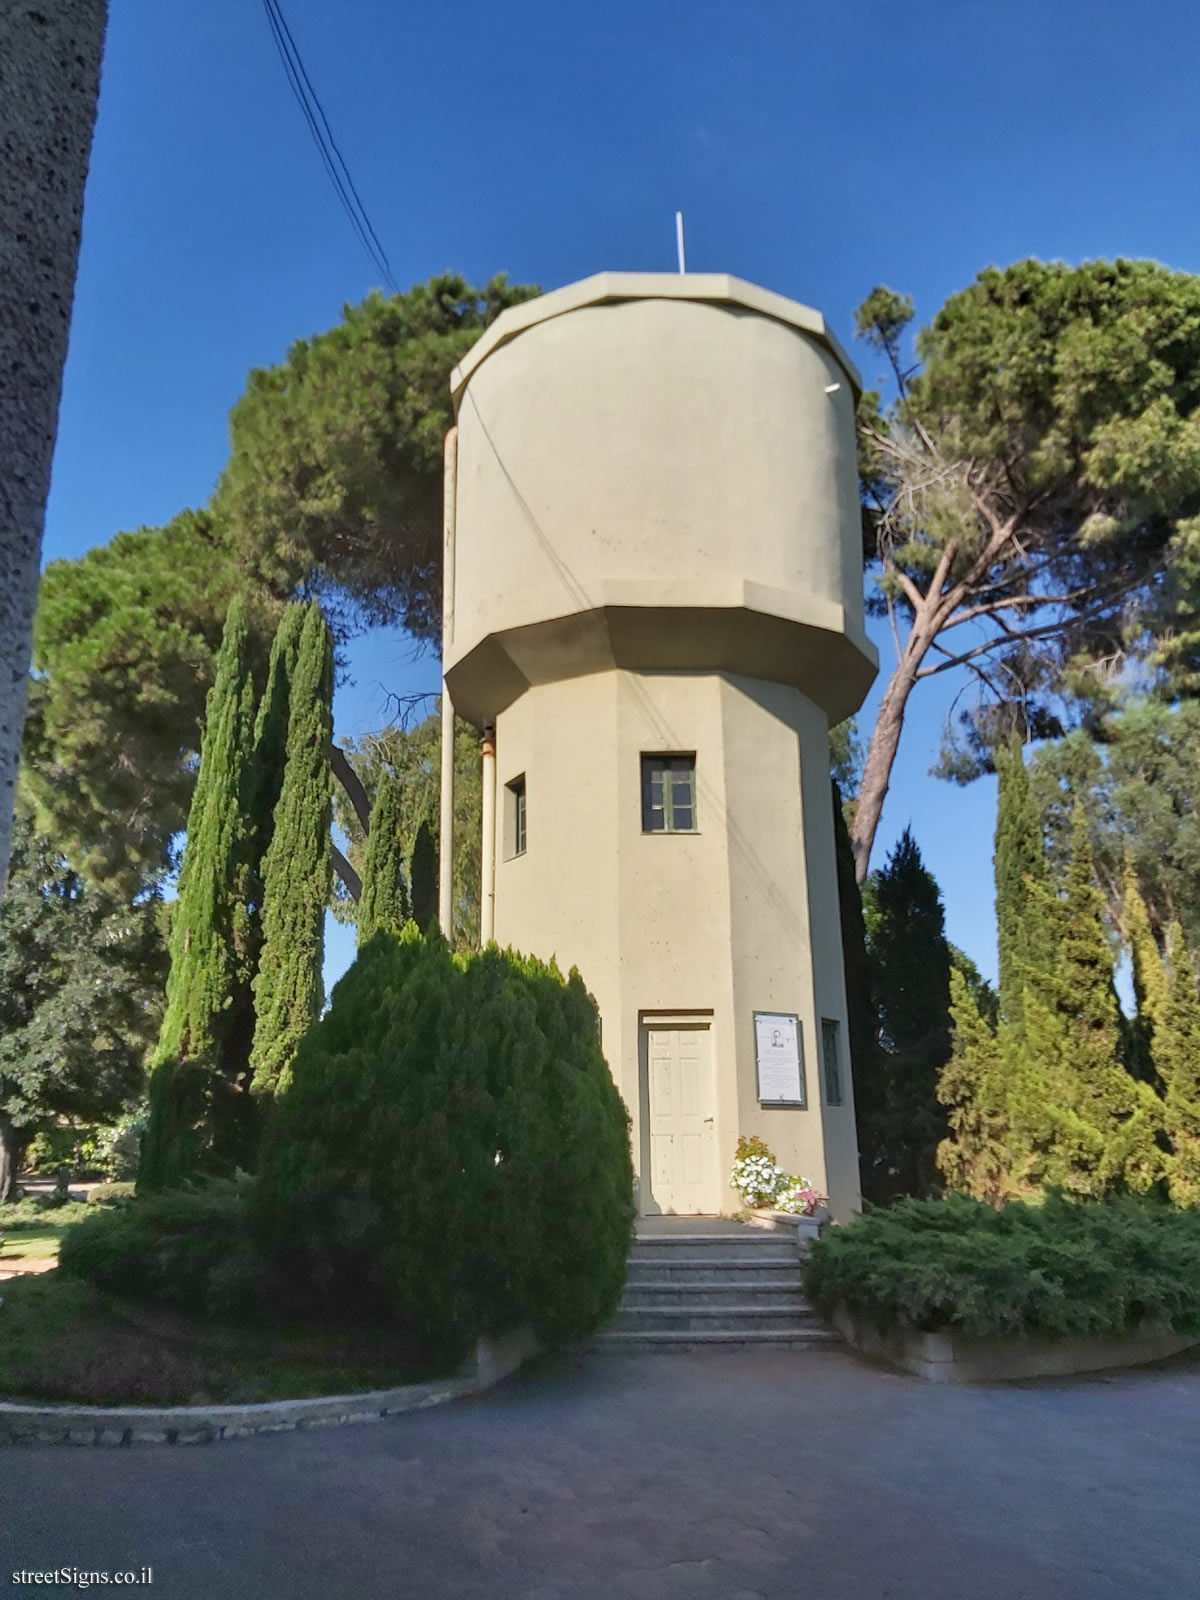 Givat Haim (Meuhad) - The water tower